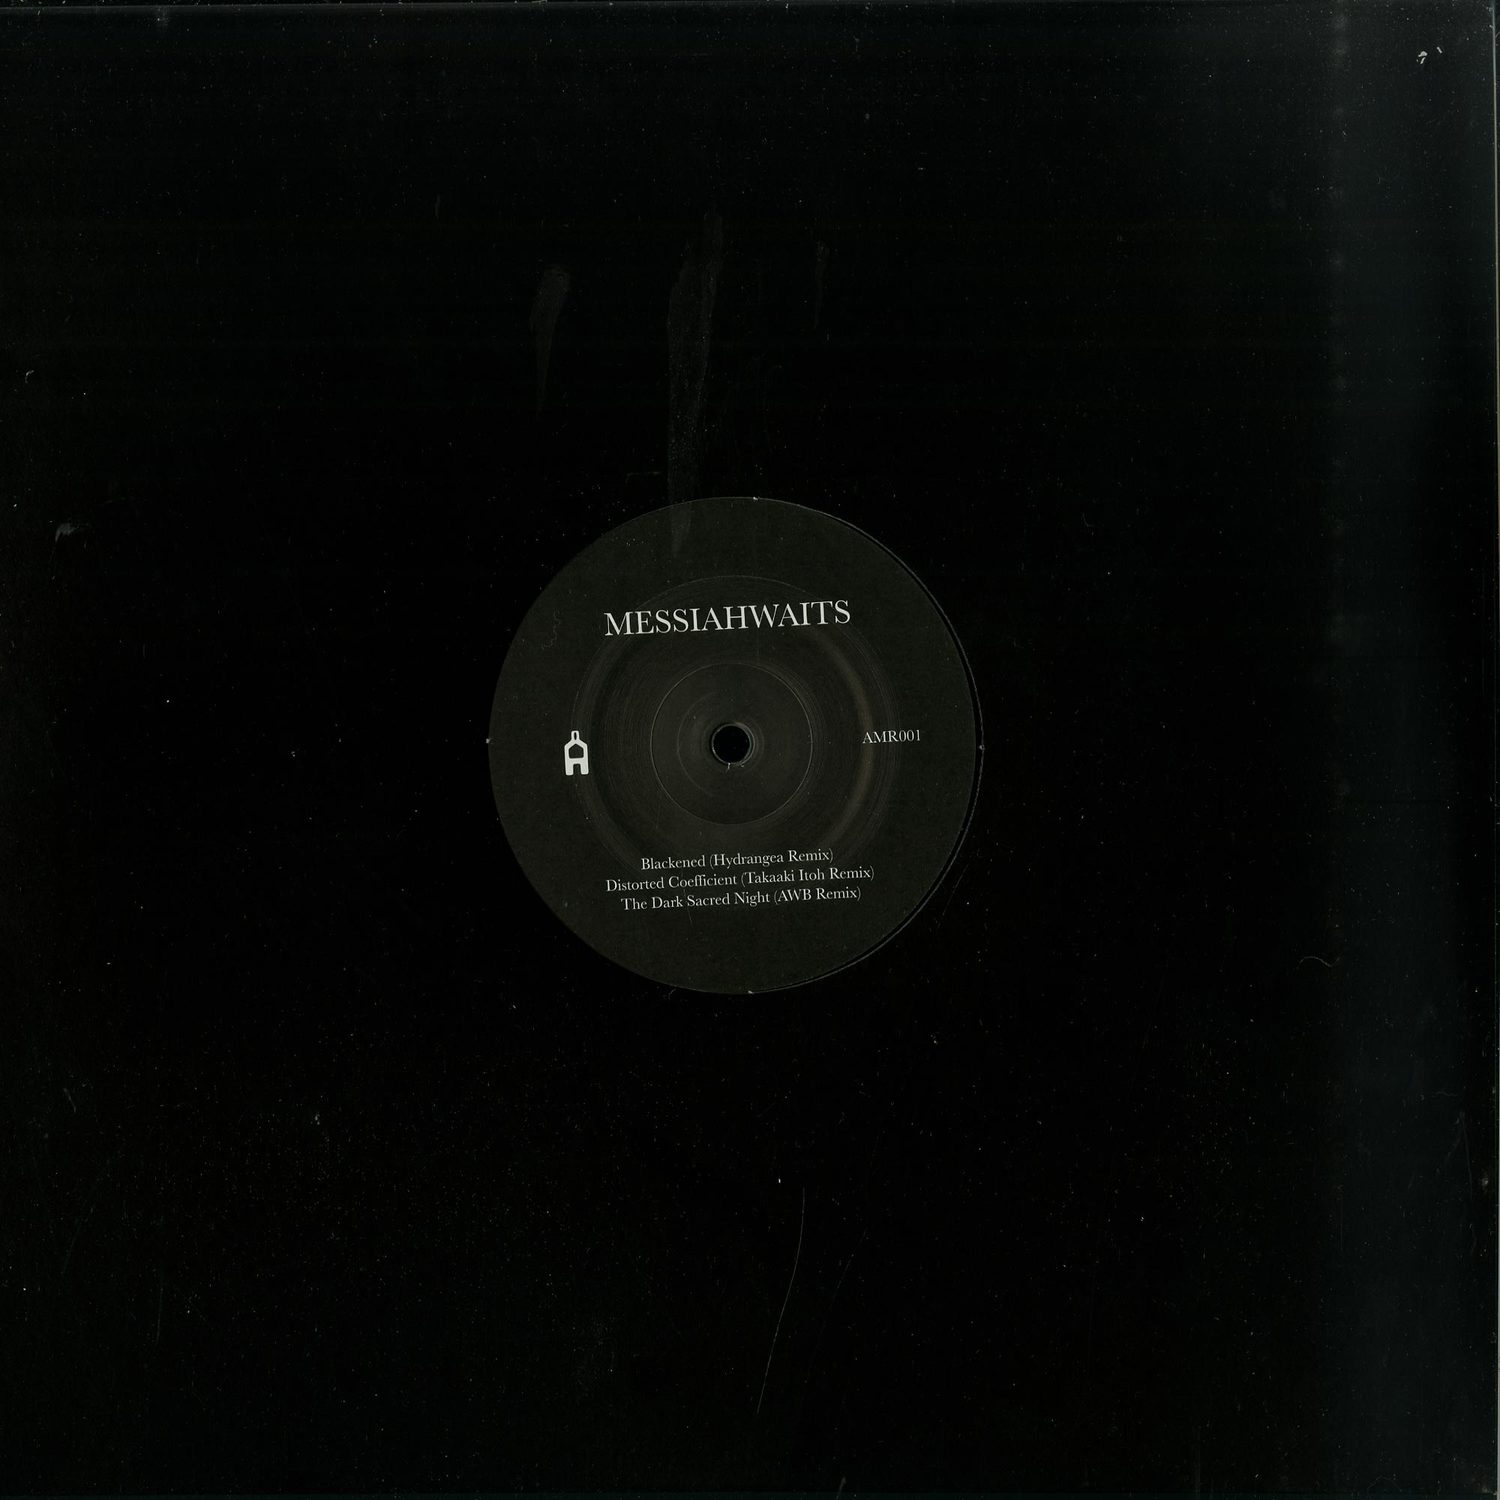 Messiahwaits - BLACKENED REMIX EP 